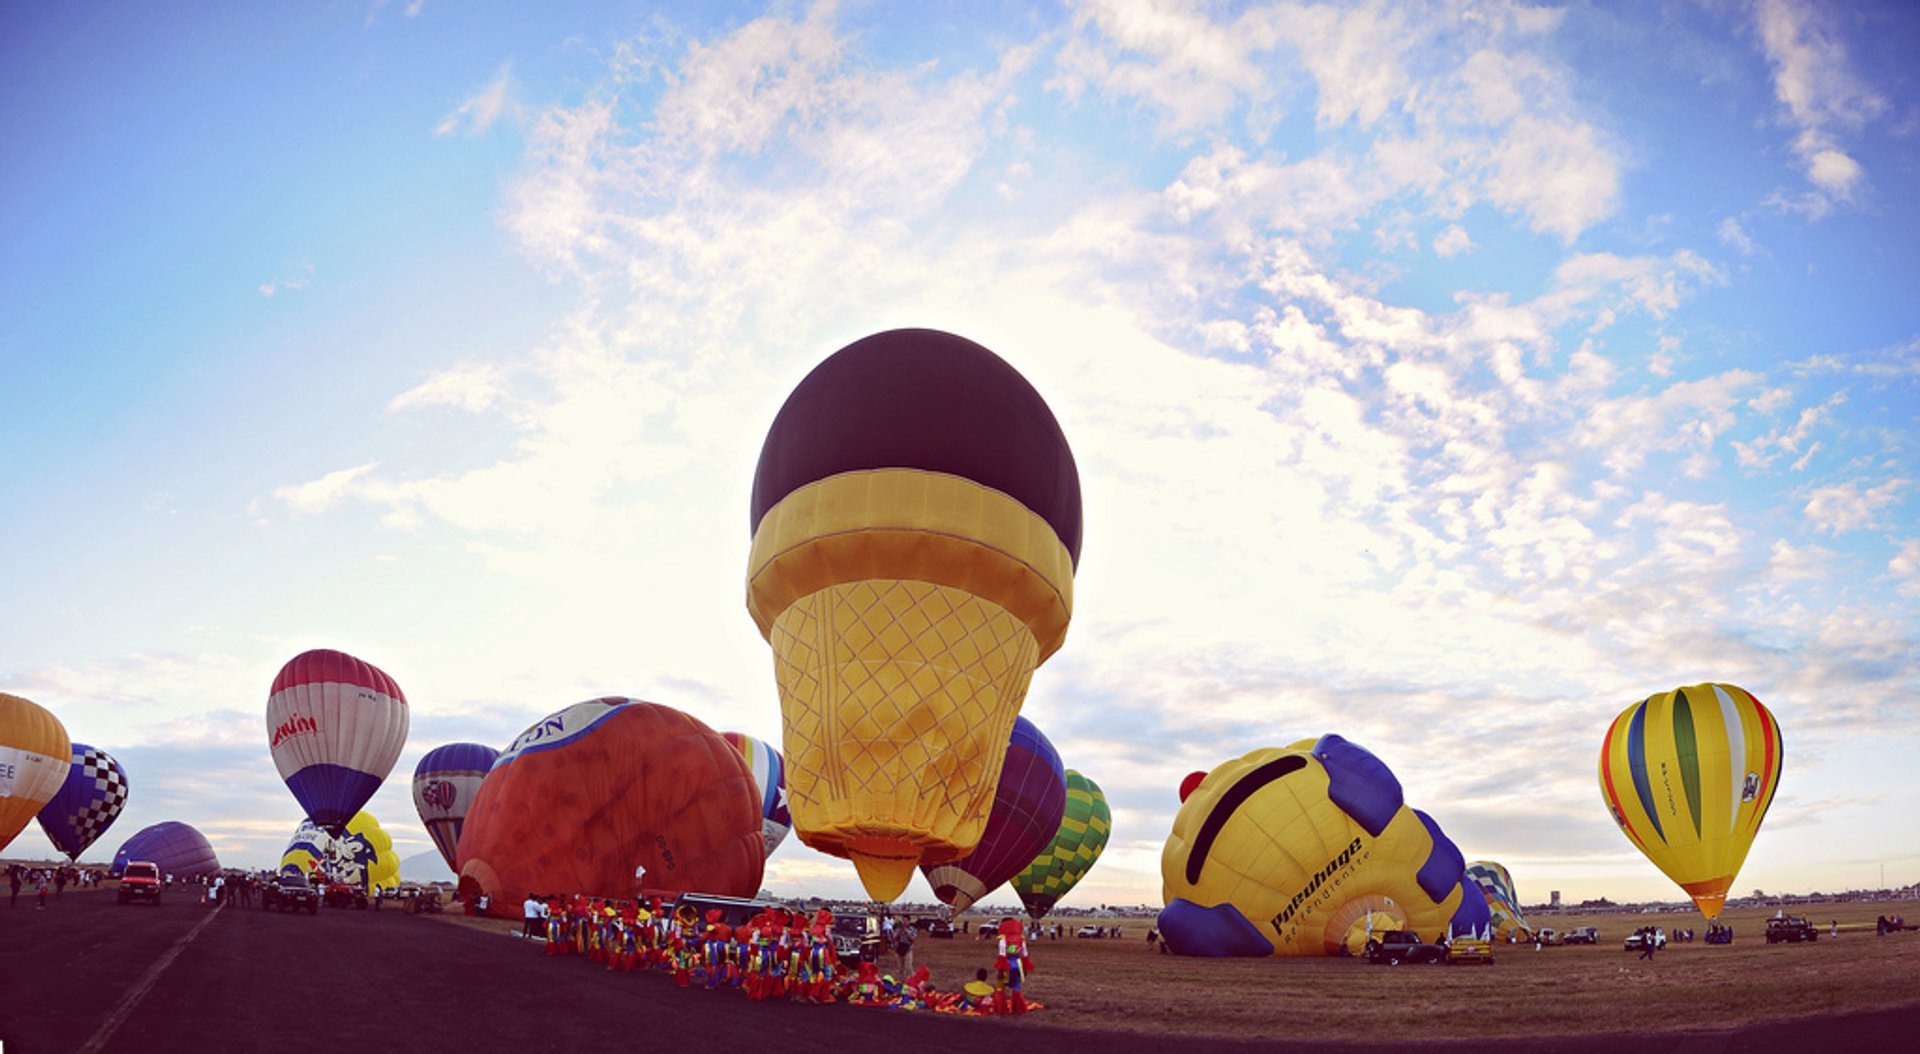 Philippinische internationale Heißluftballon-Fiesta